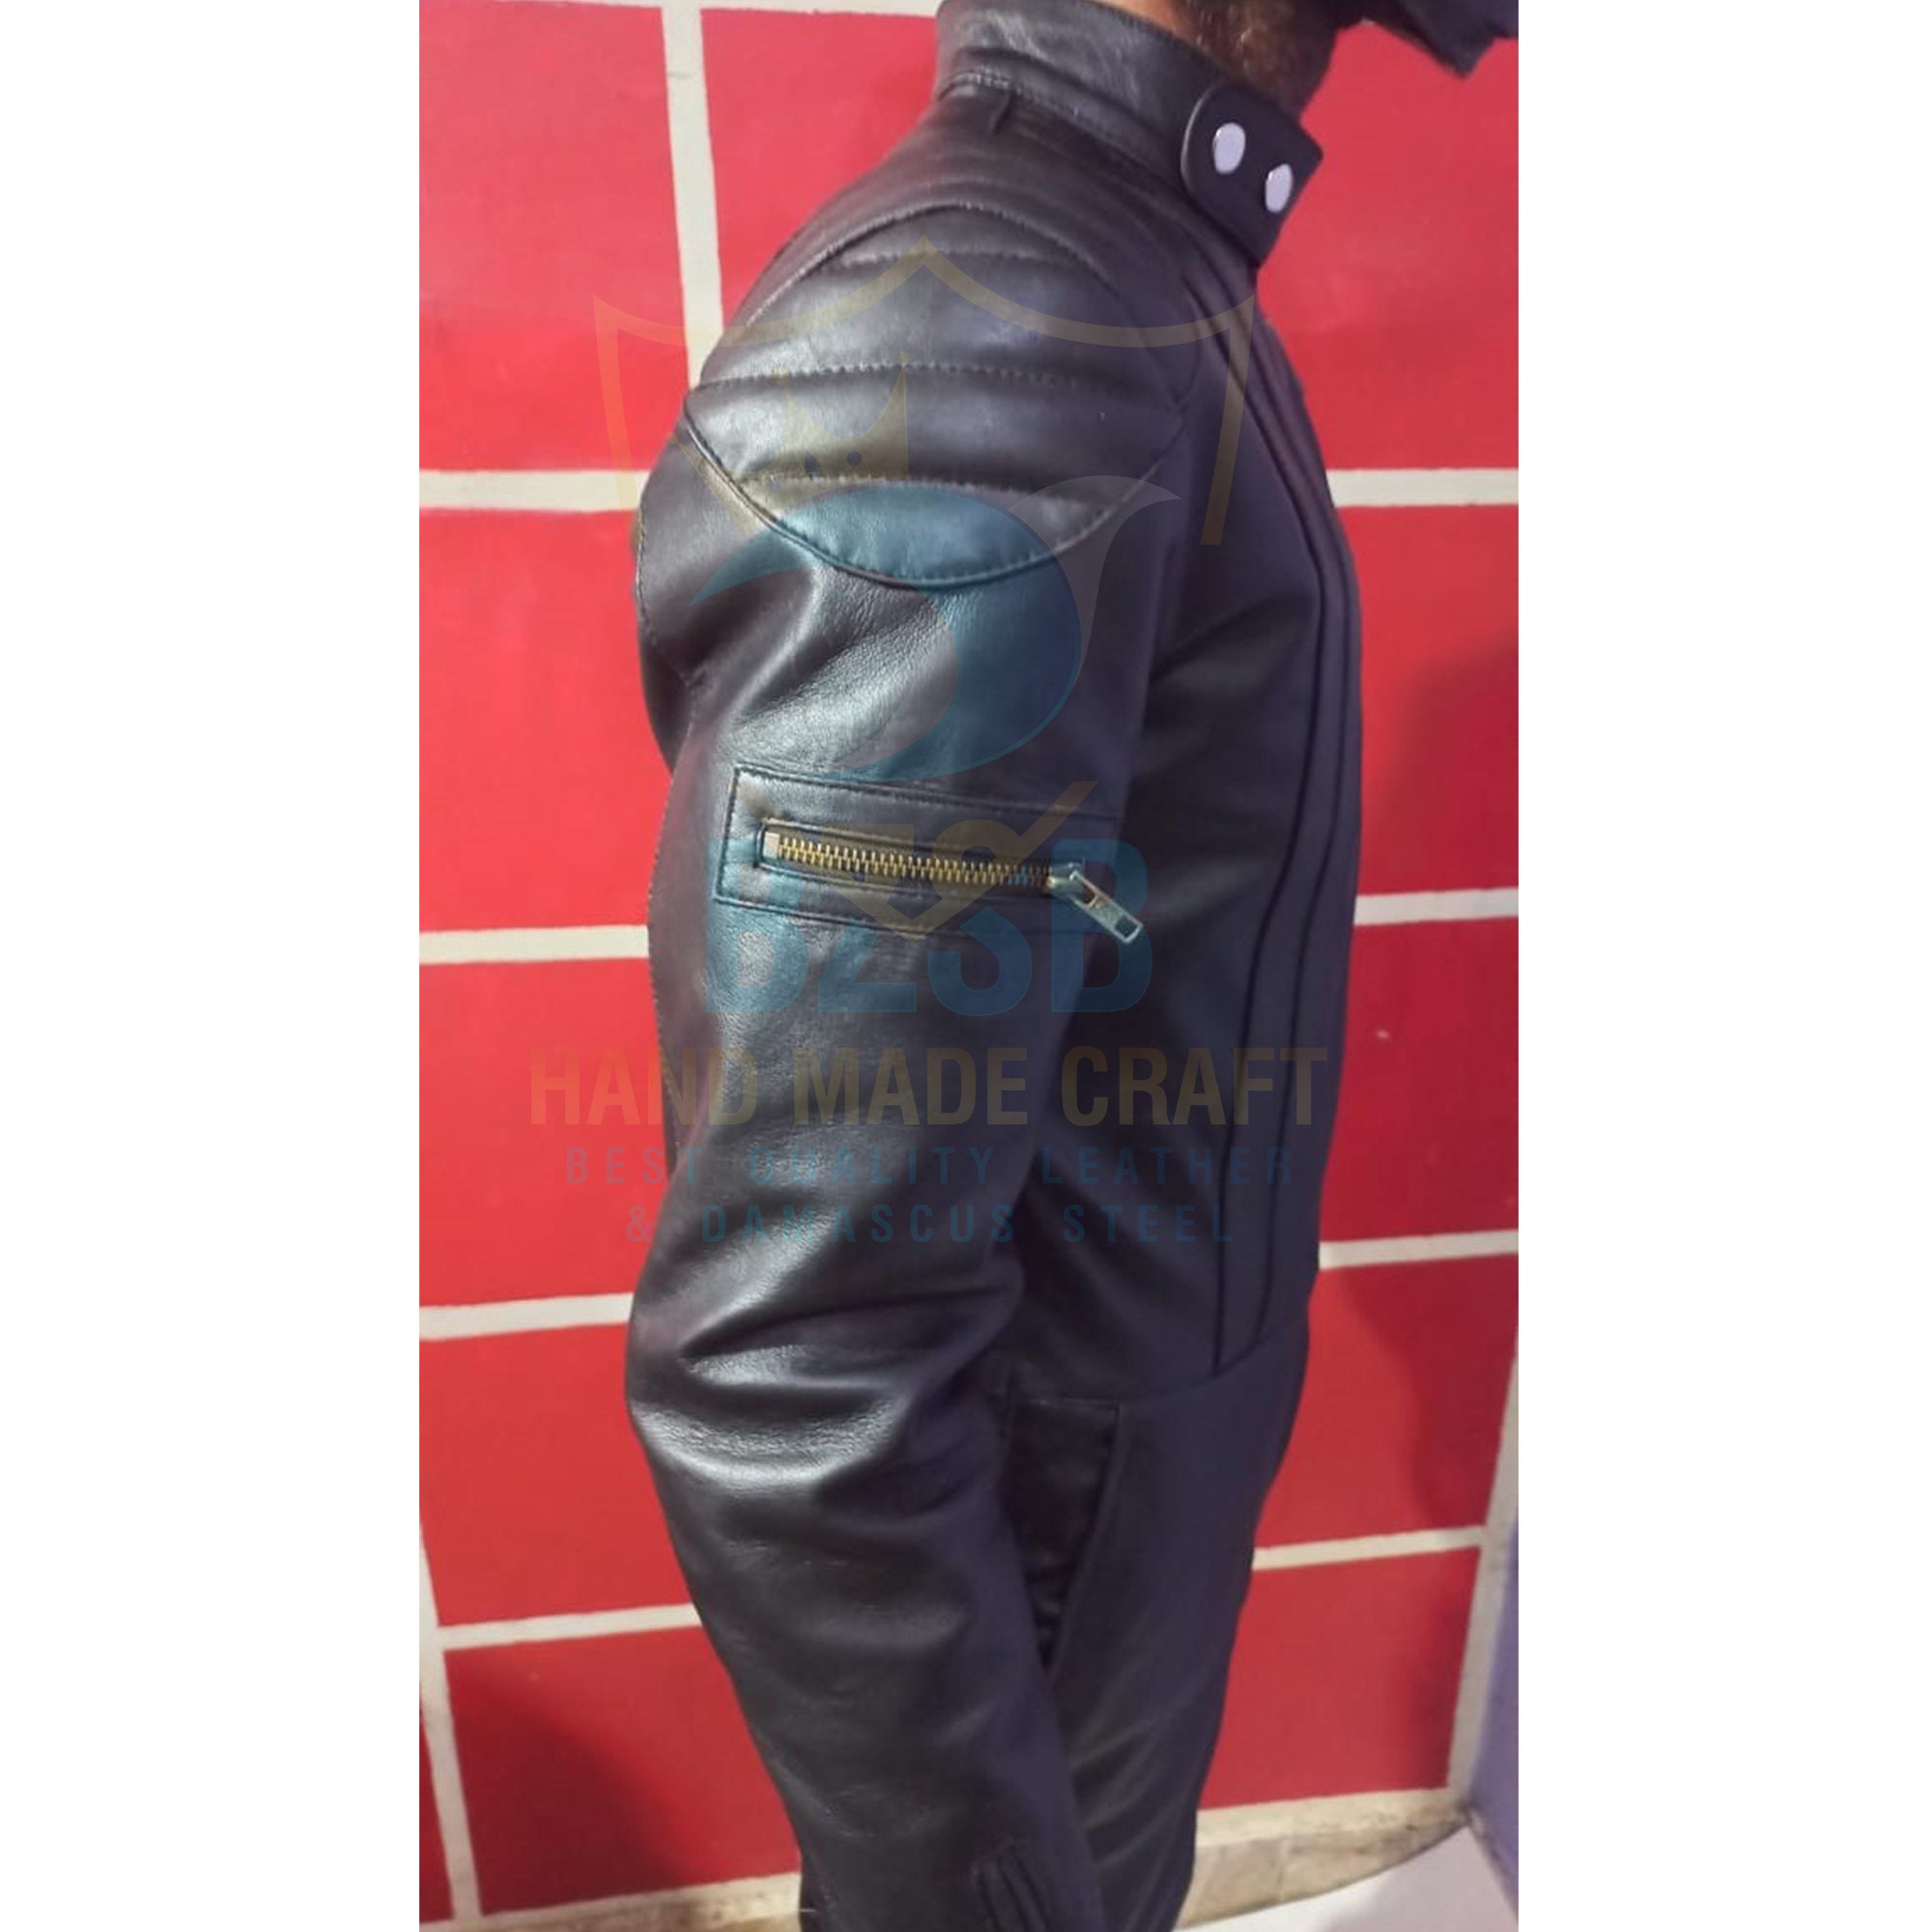 Real Leather Jumpsuit Bodysuit Handmade Black Leather Cat Suit Body